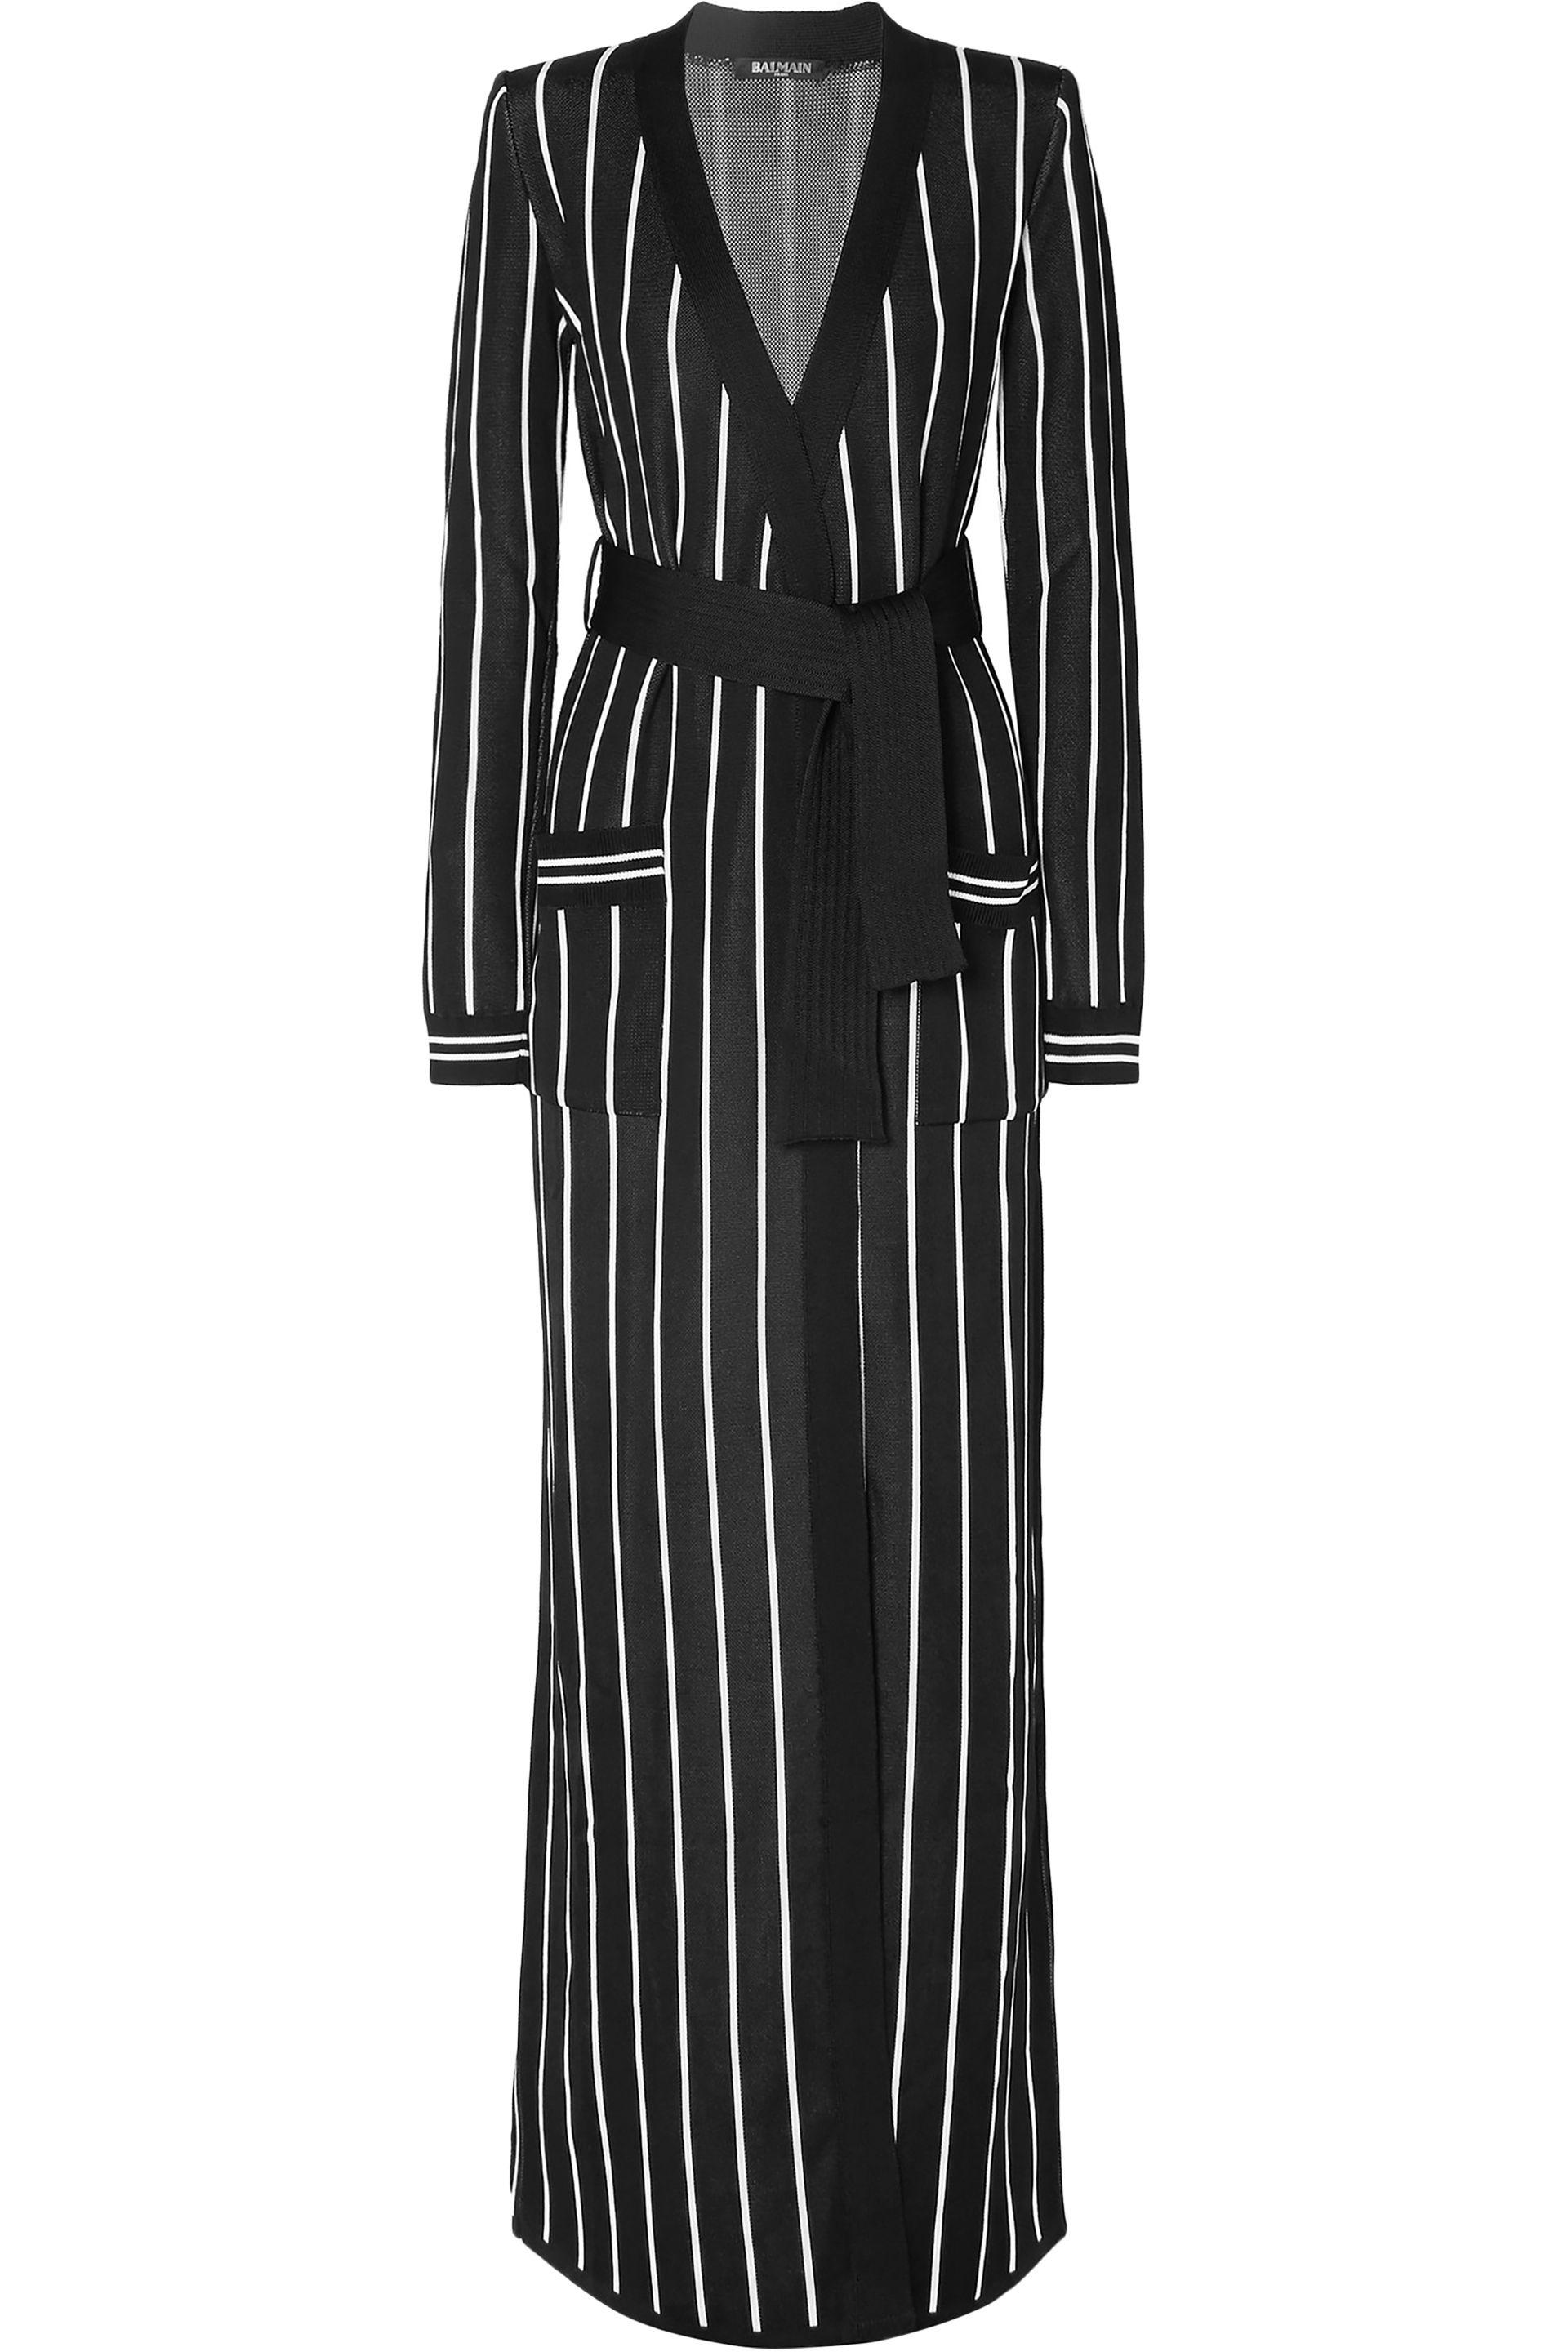 Balmain Long Striped Cardigan in Black-Silver (Black) - Lyst